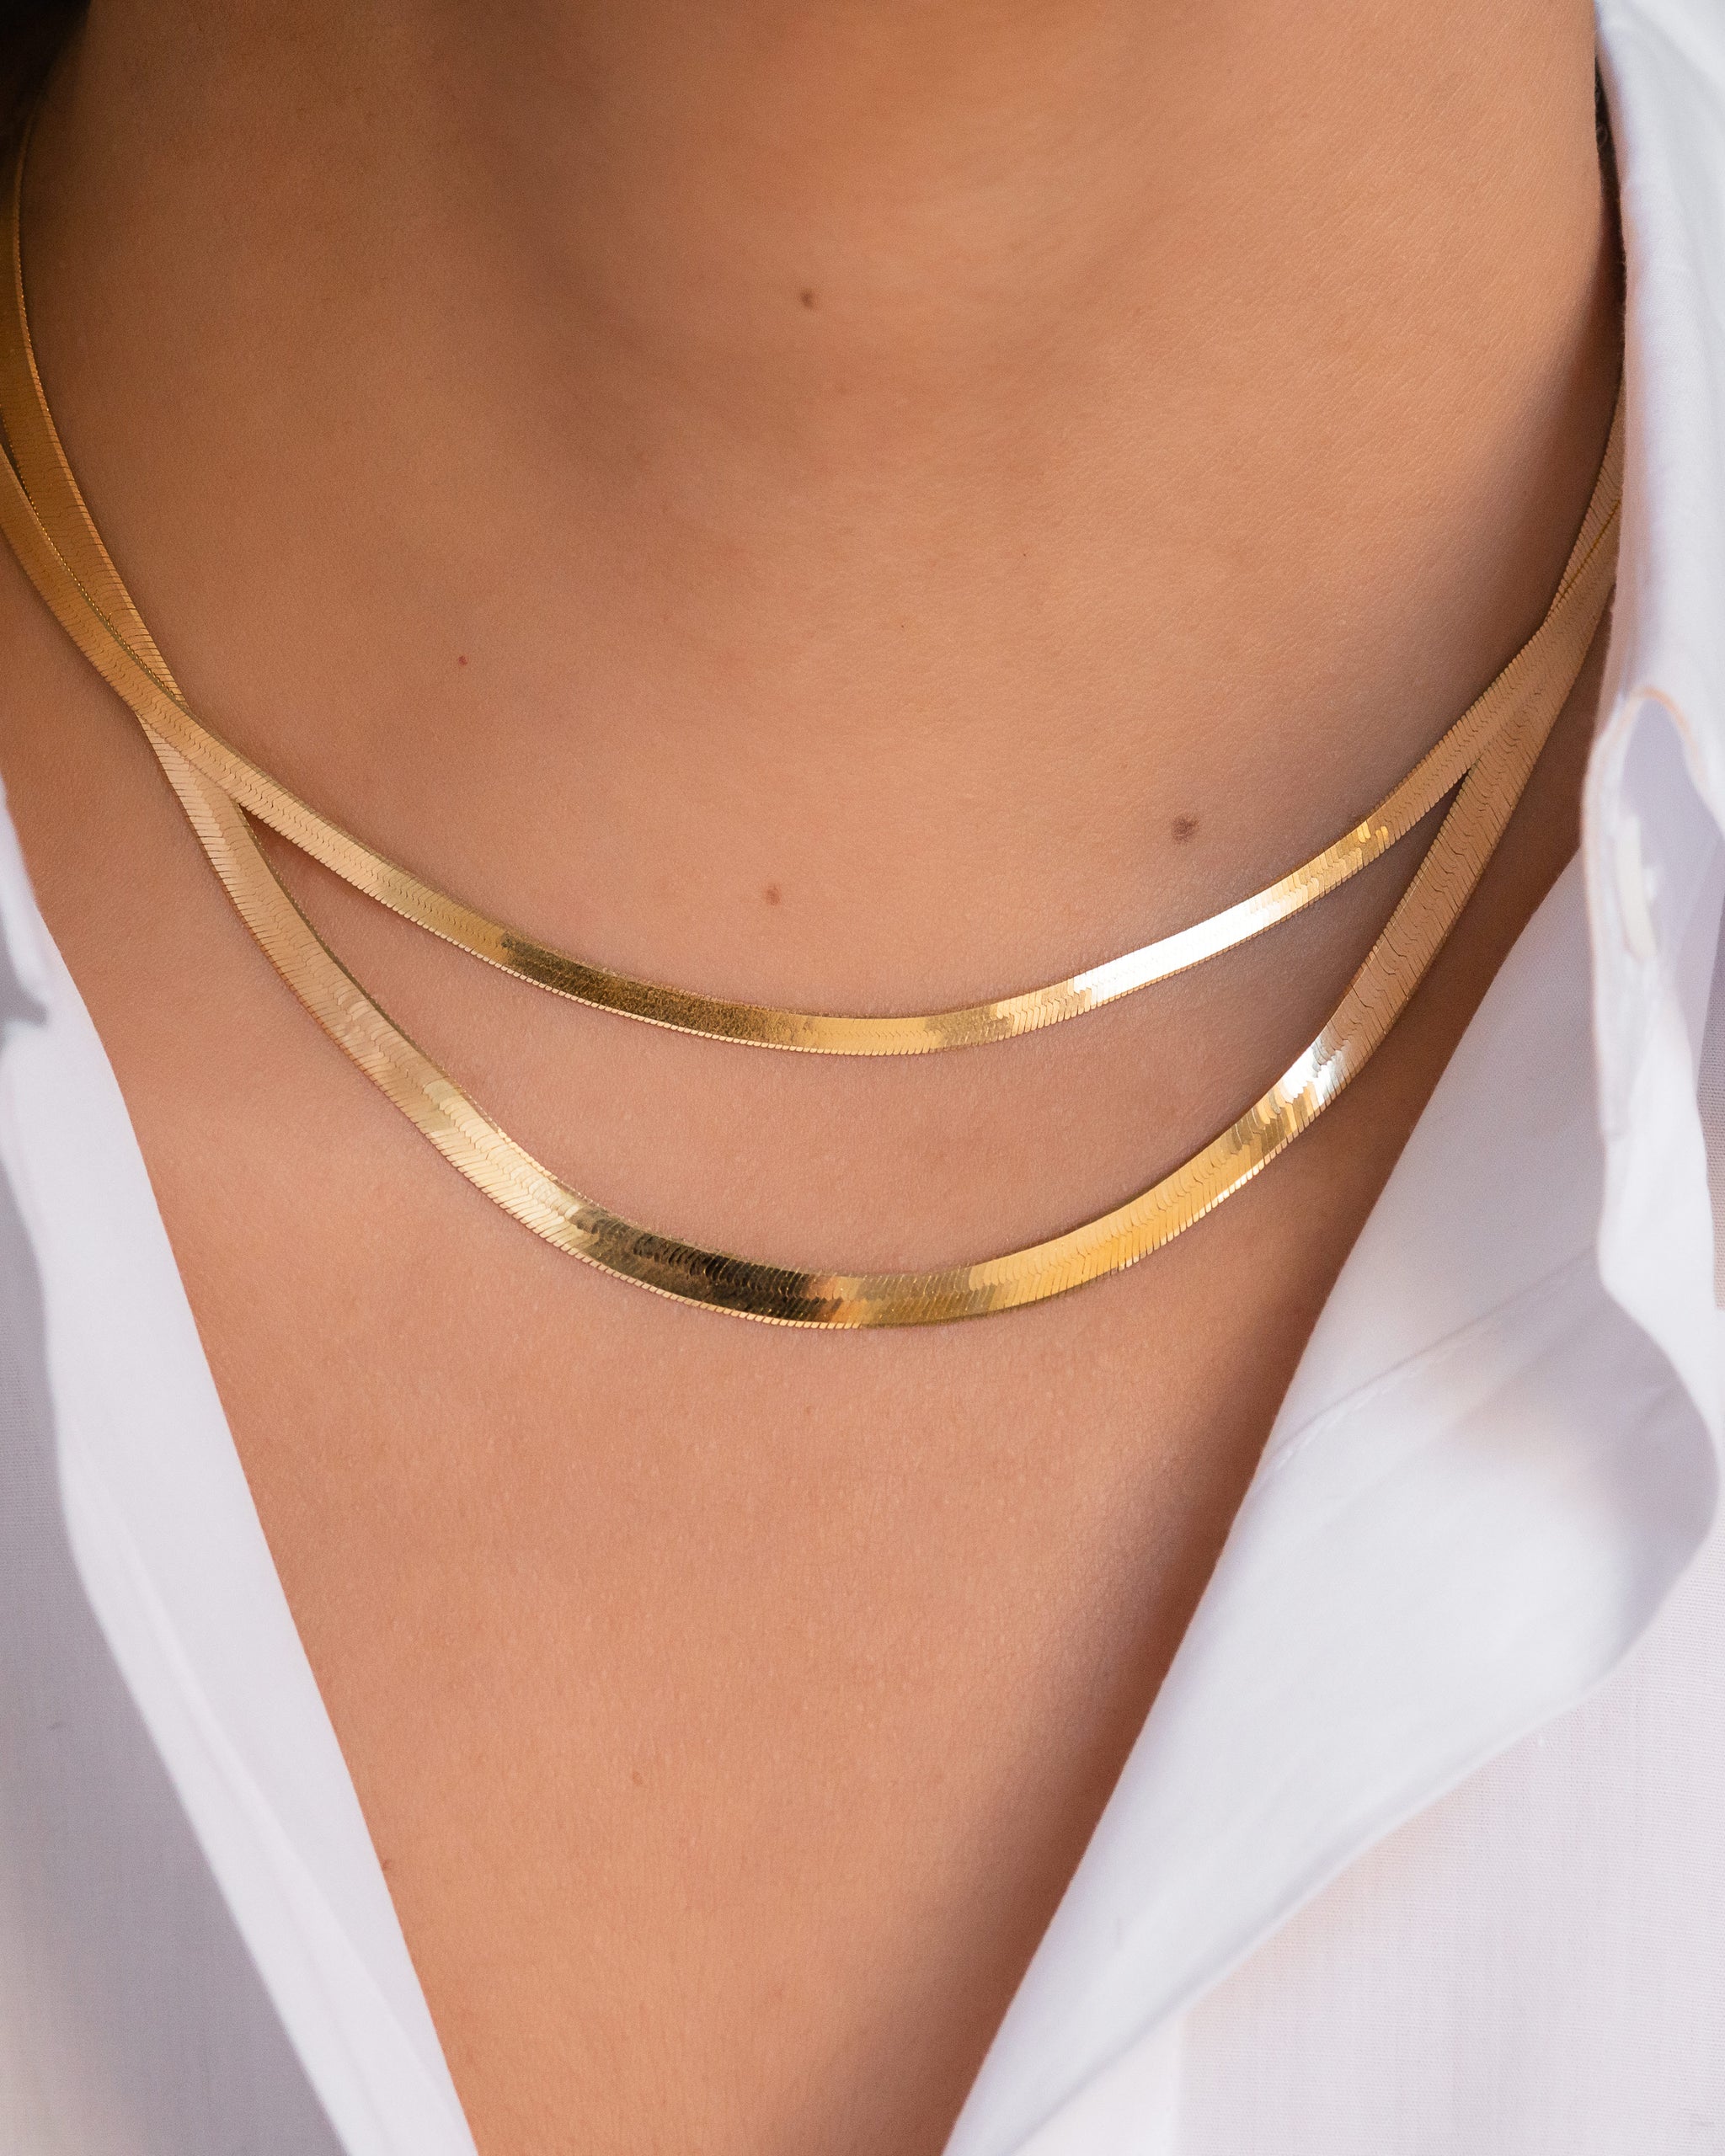 Herringbone Gold Vermeil Engraved Necklace For Women - Talisa